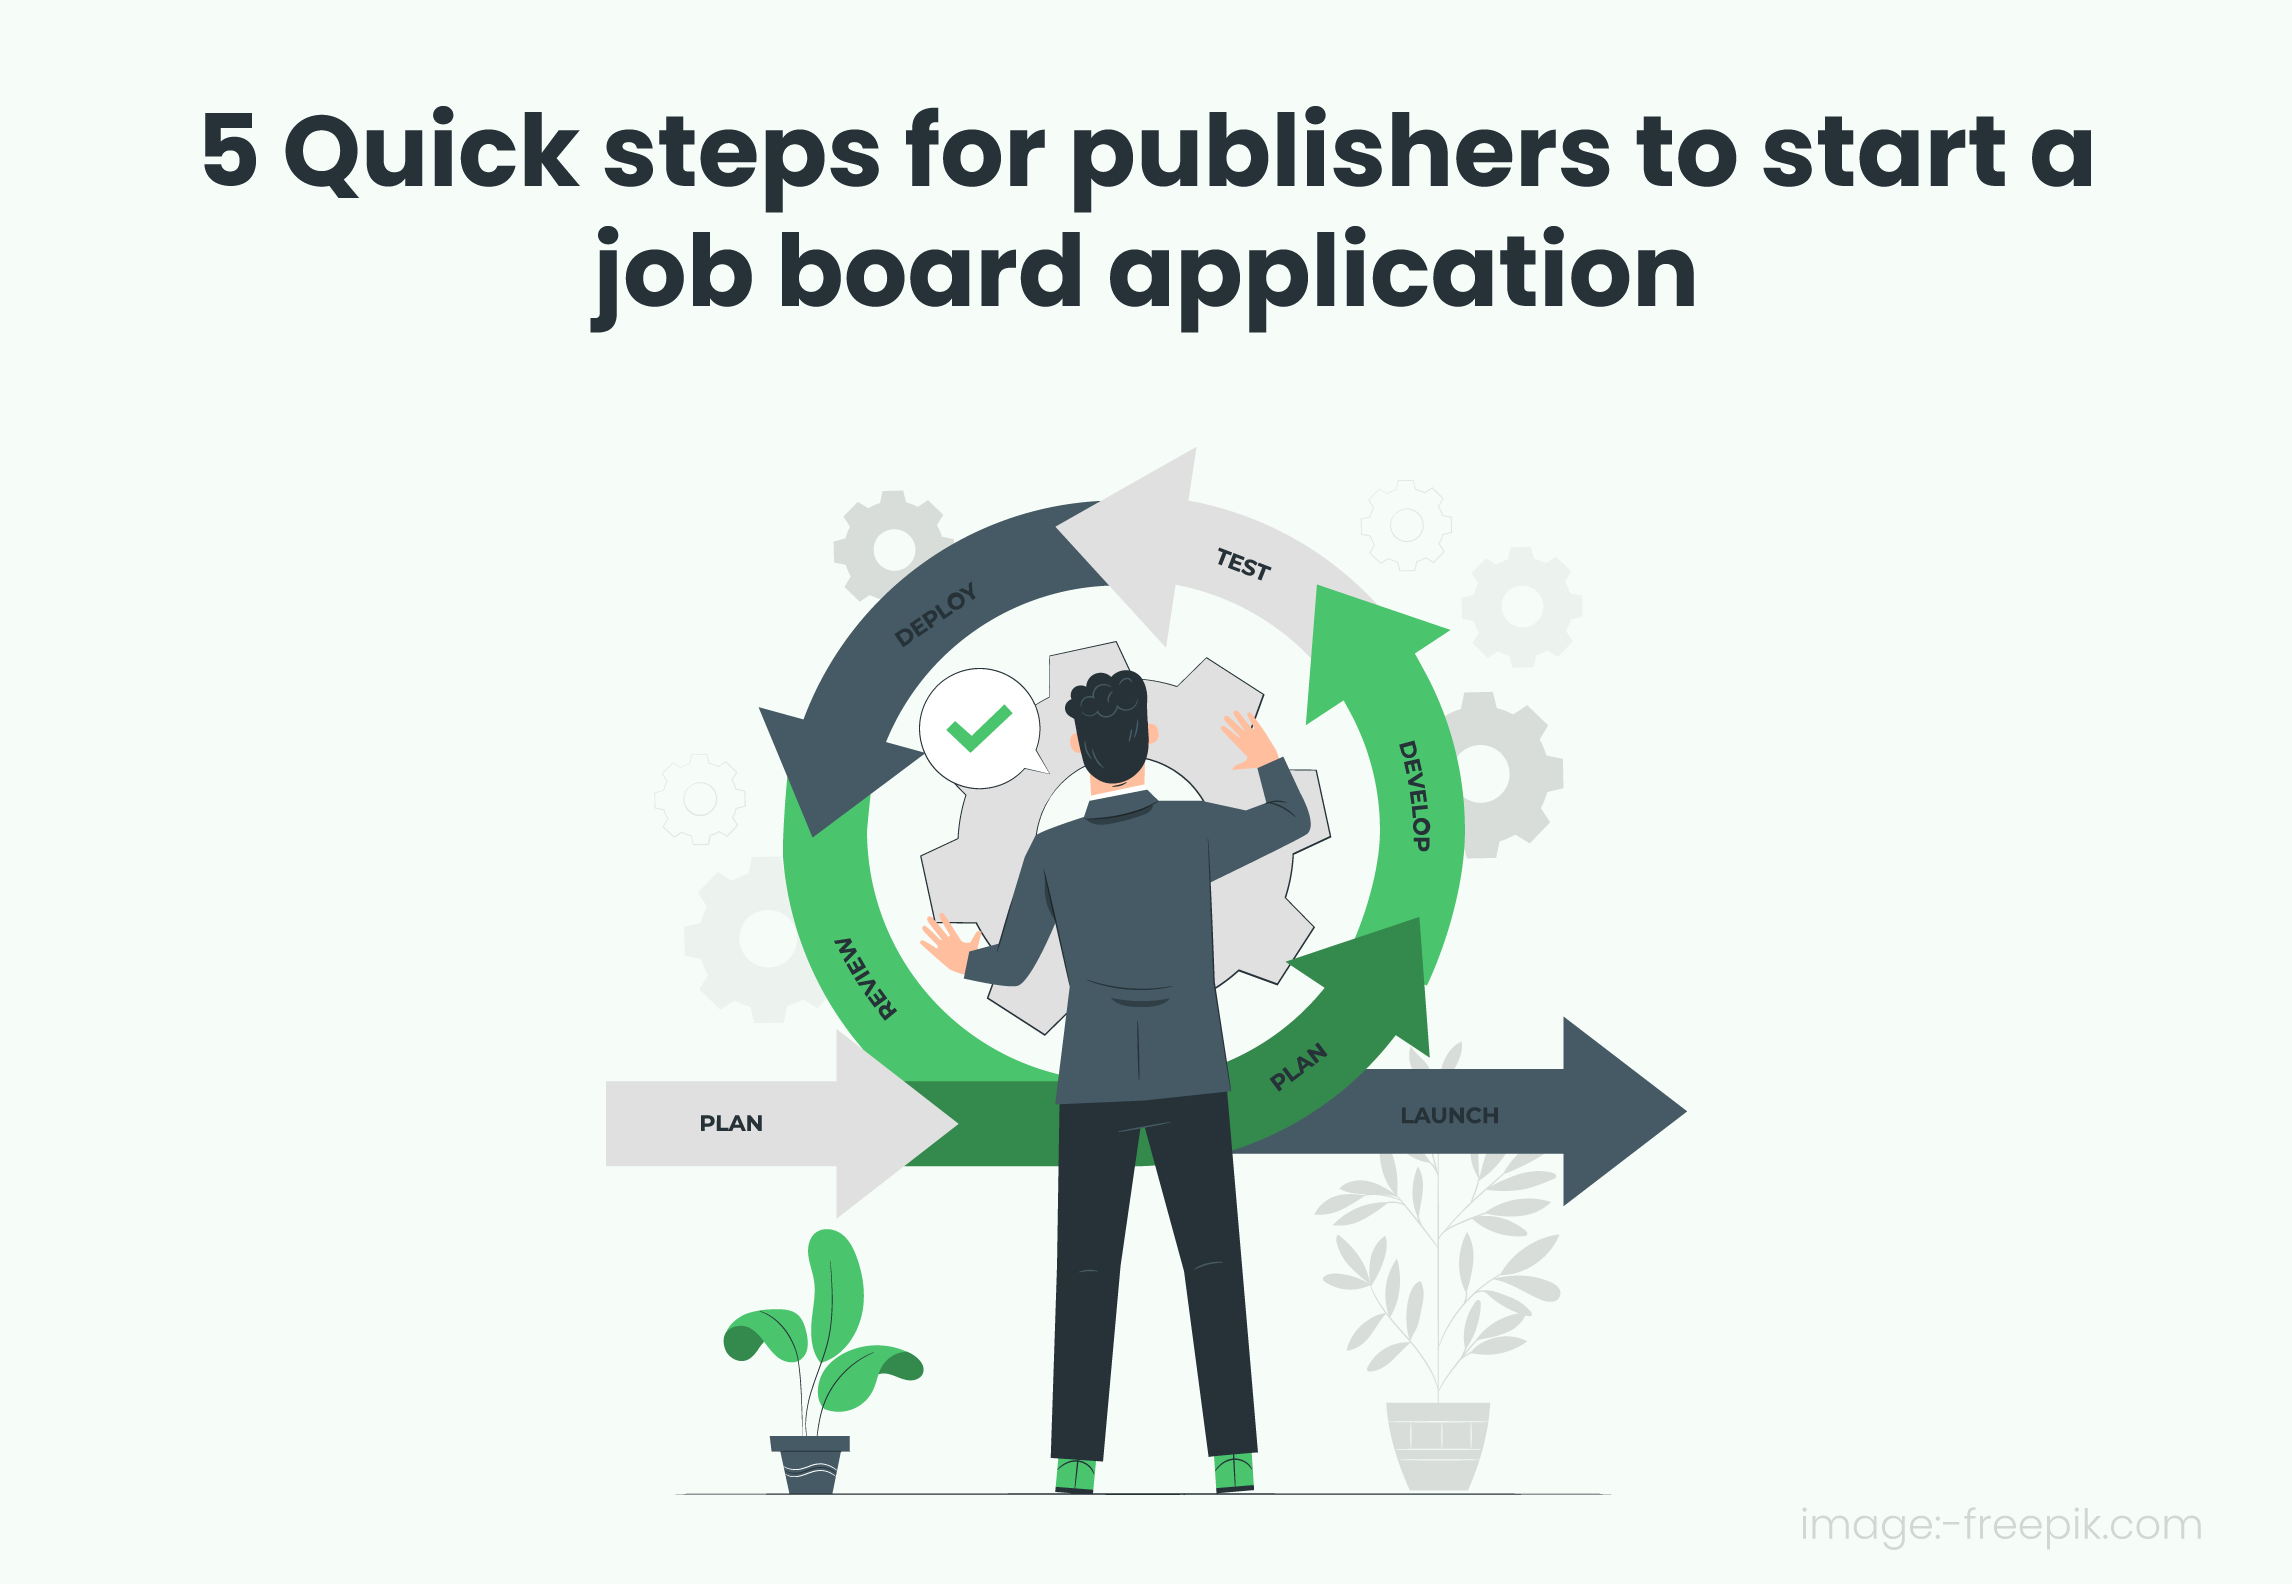 Steps to Start a Job Board Application